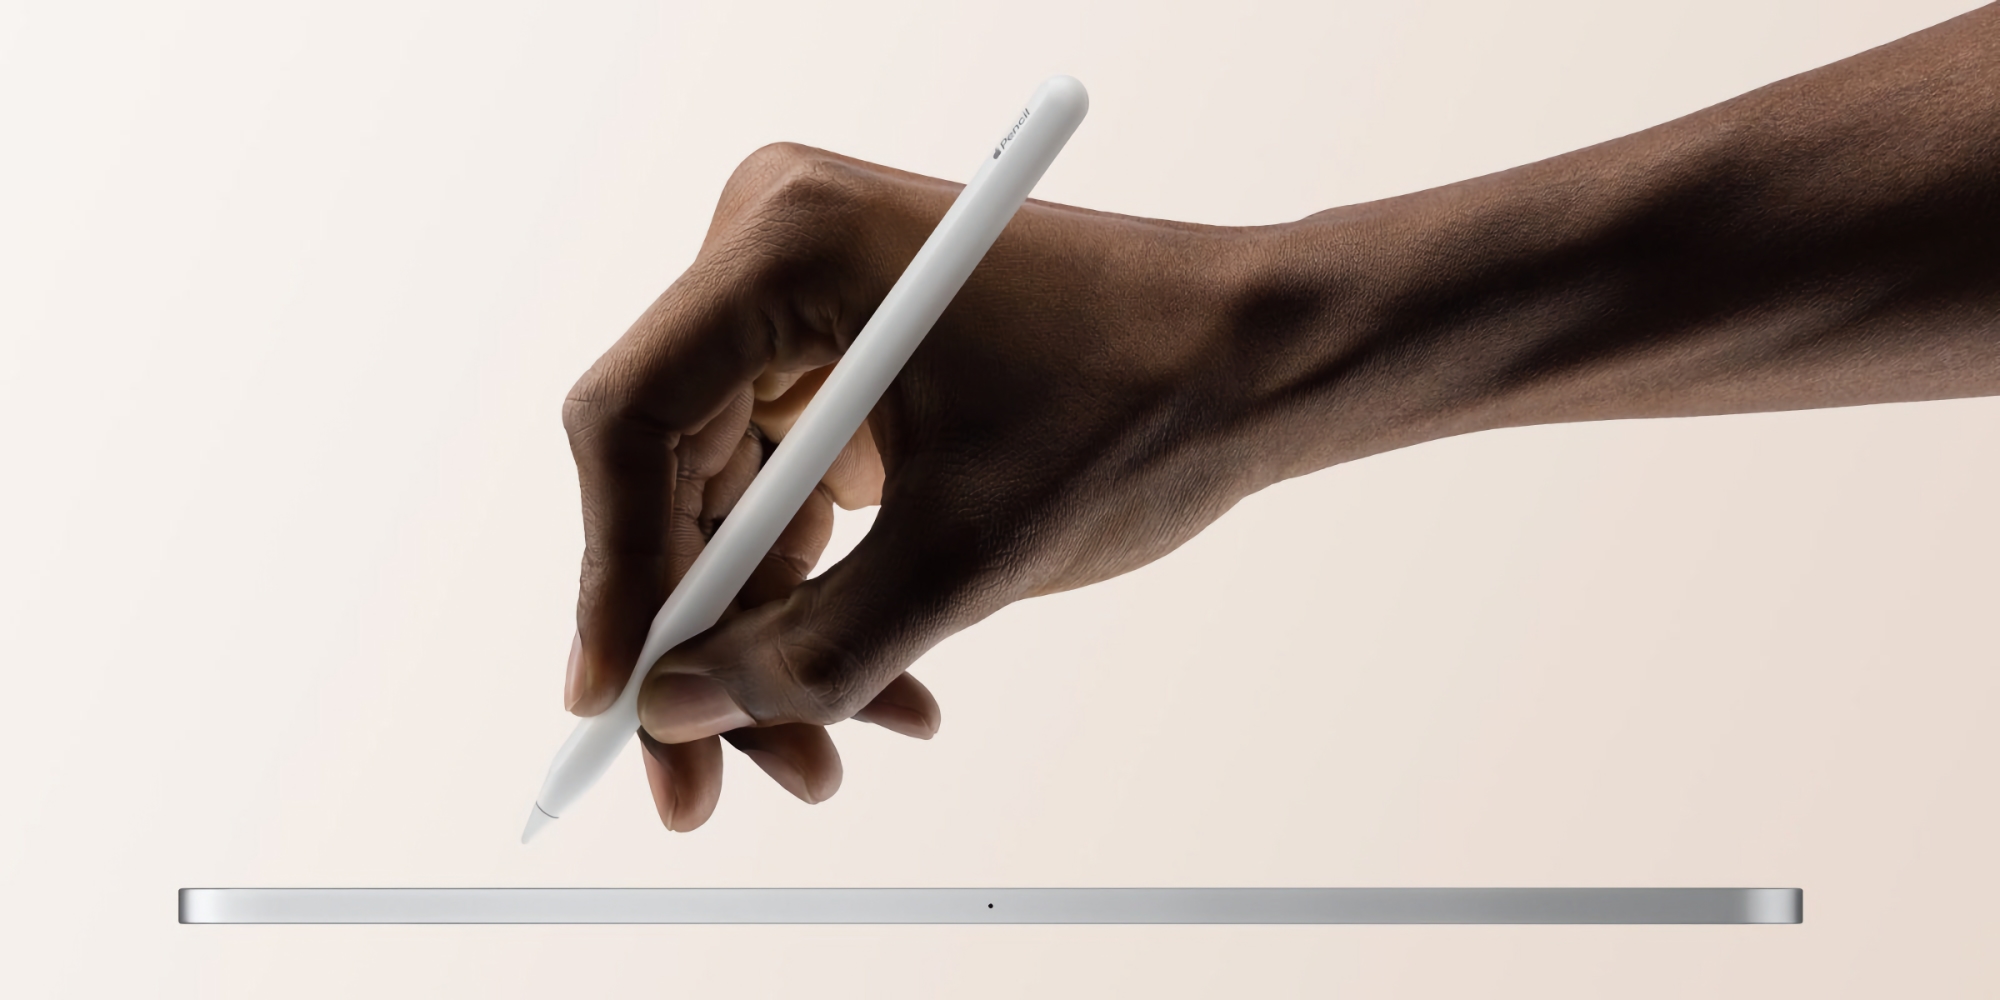 Apple Pencil 3 er under utvikling, gadgeten vil få en USB-C-port